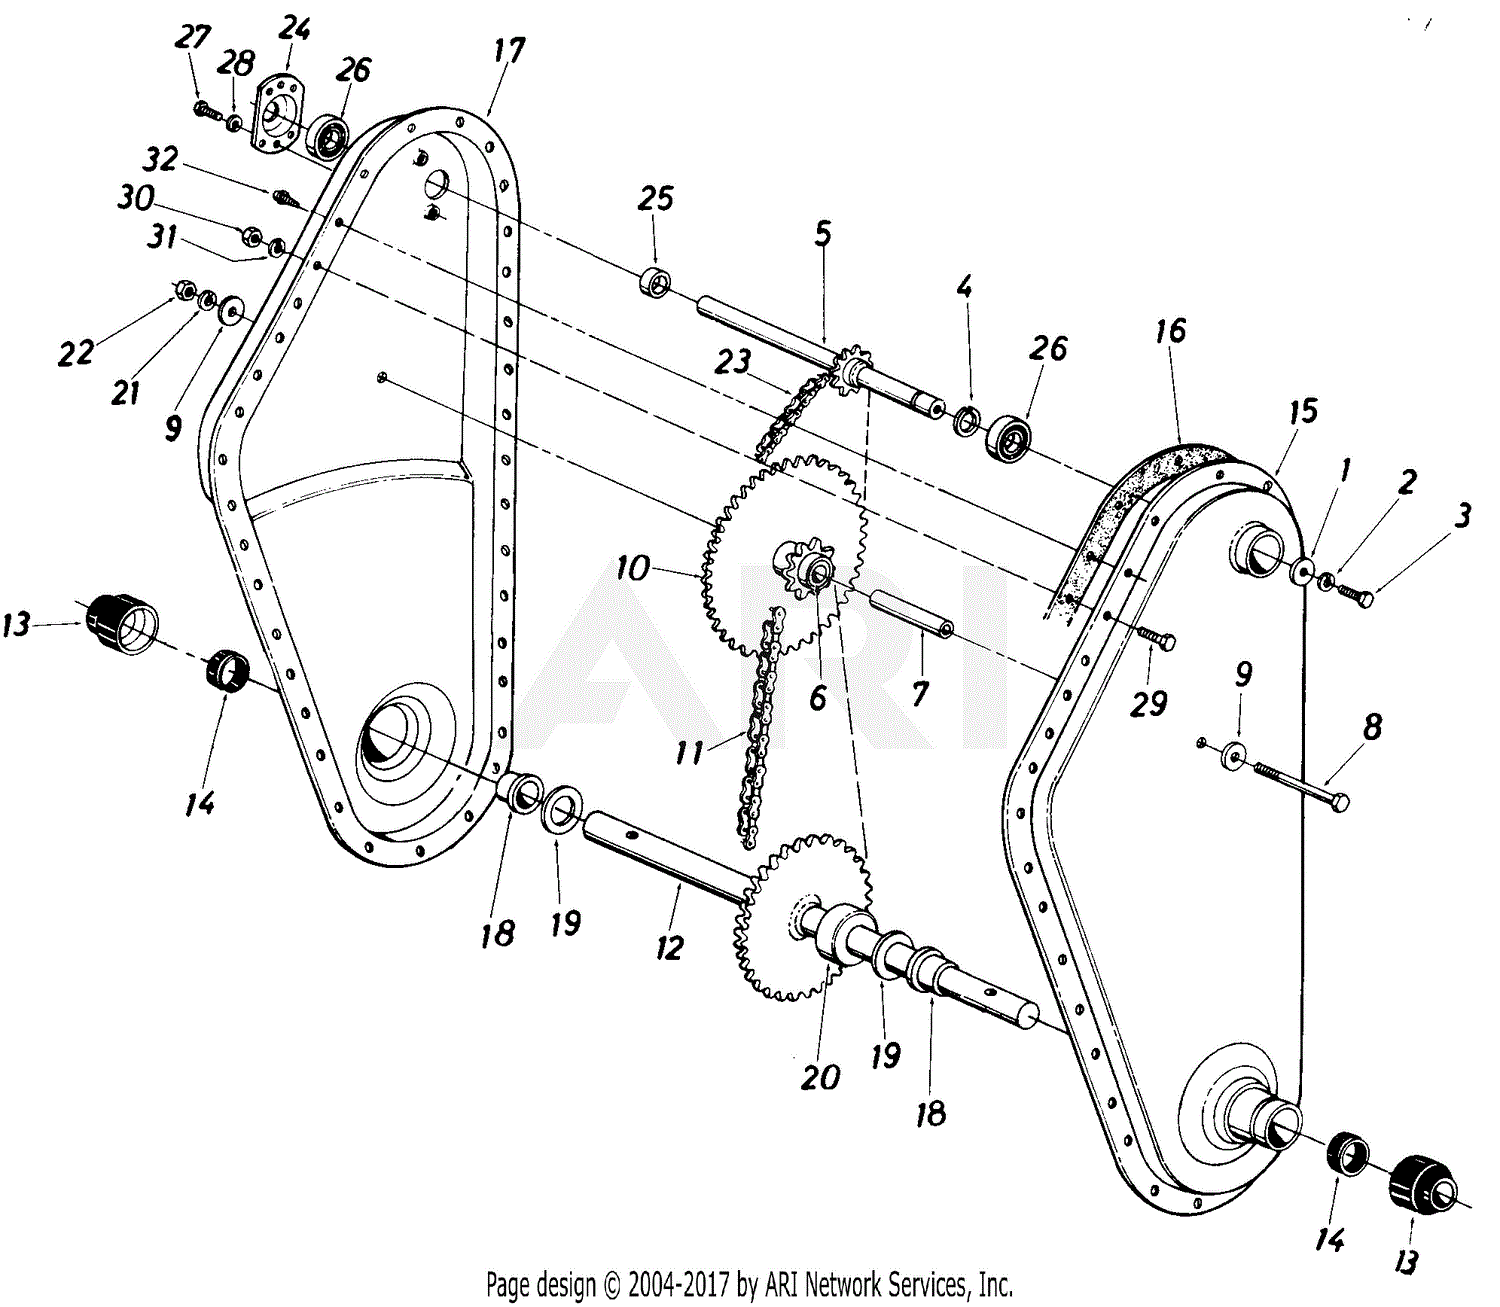 Parts Diagram For Tiller Chain Case